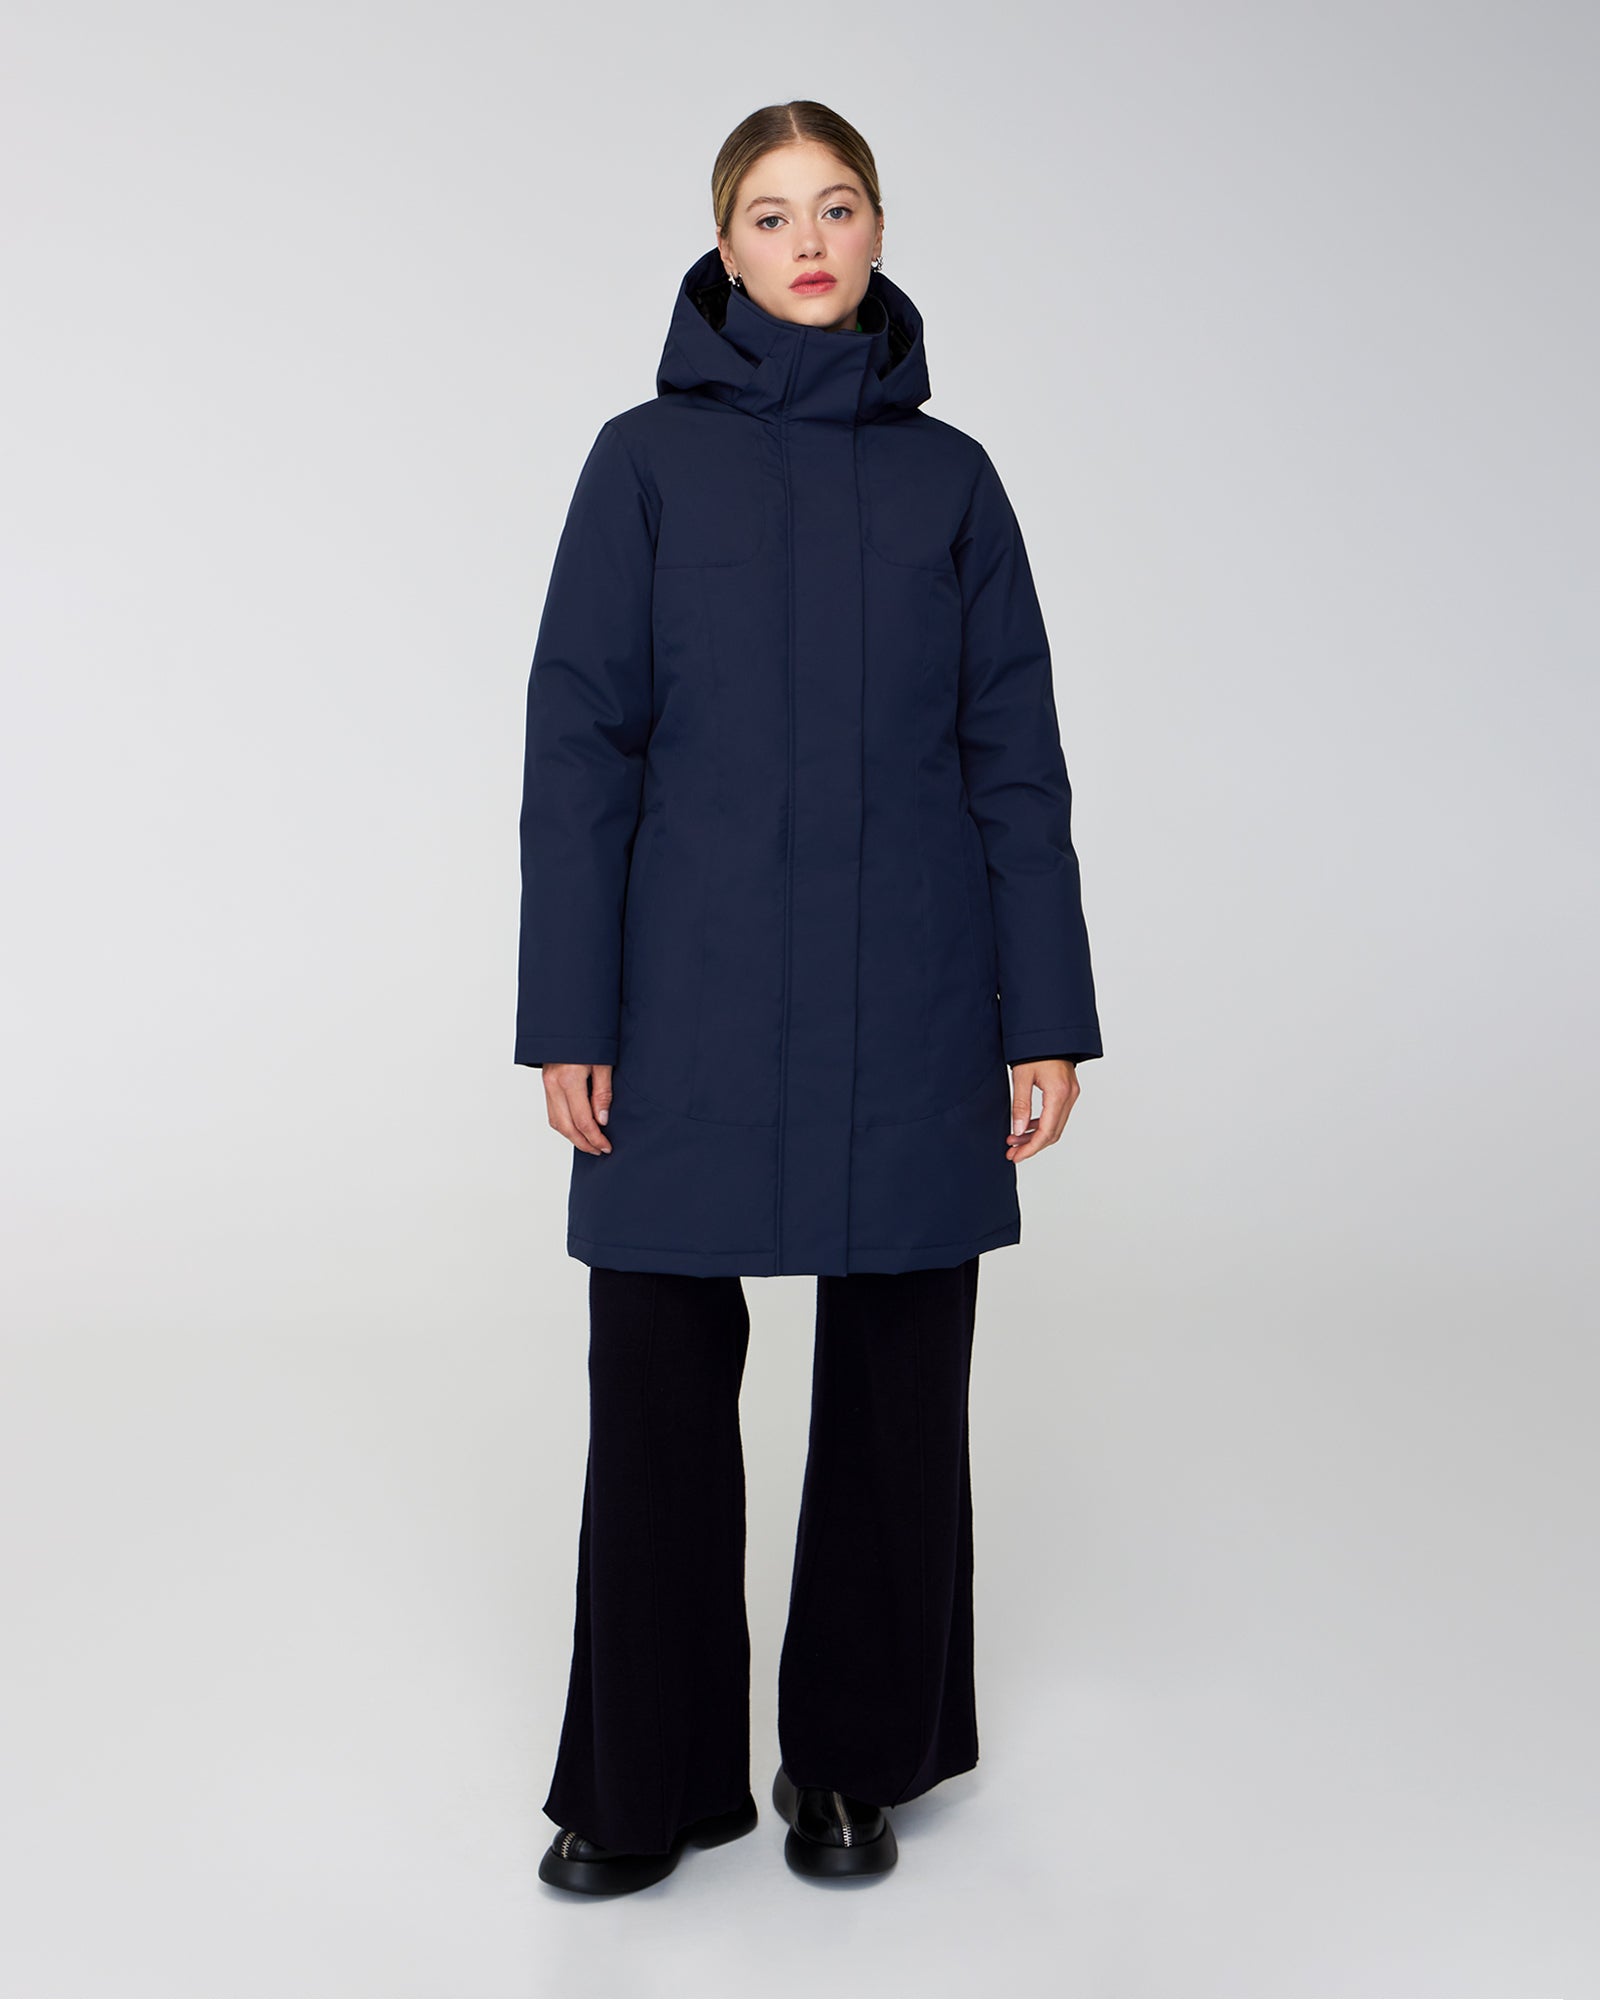 KIMBERLY | Hooded Down Winter Jacket – Quartz Co. #keepyourcool